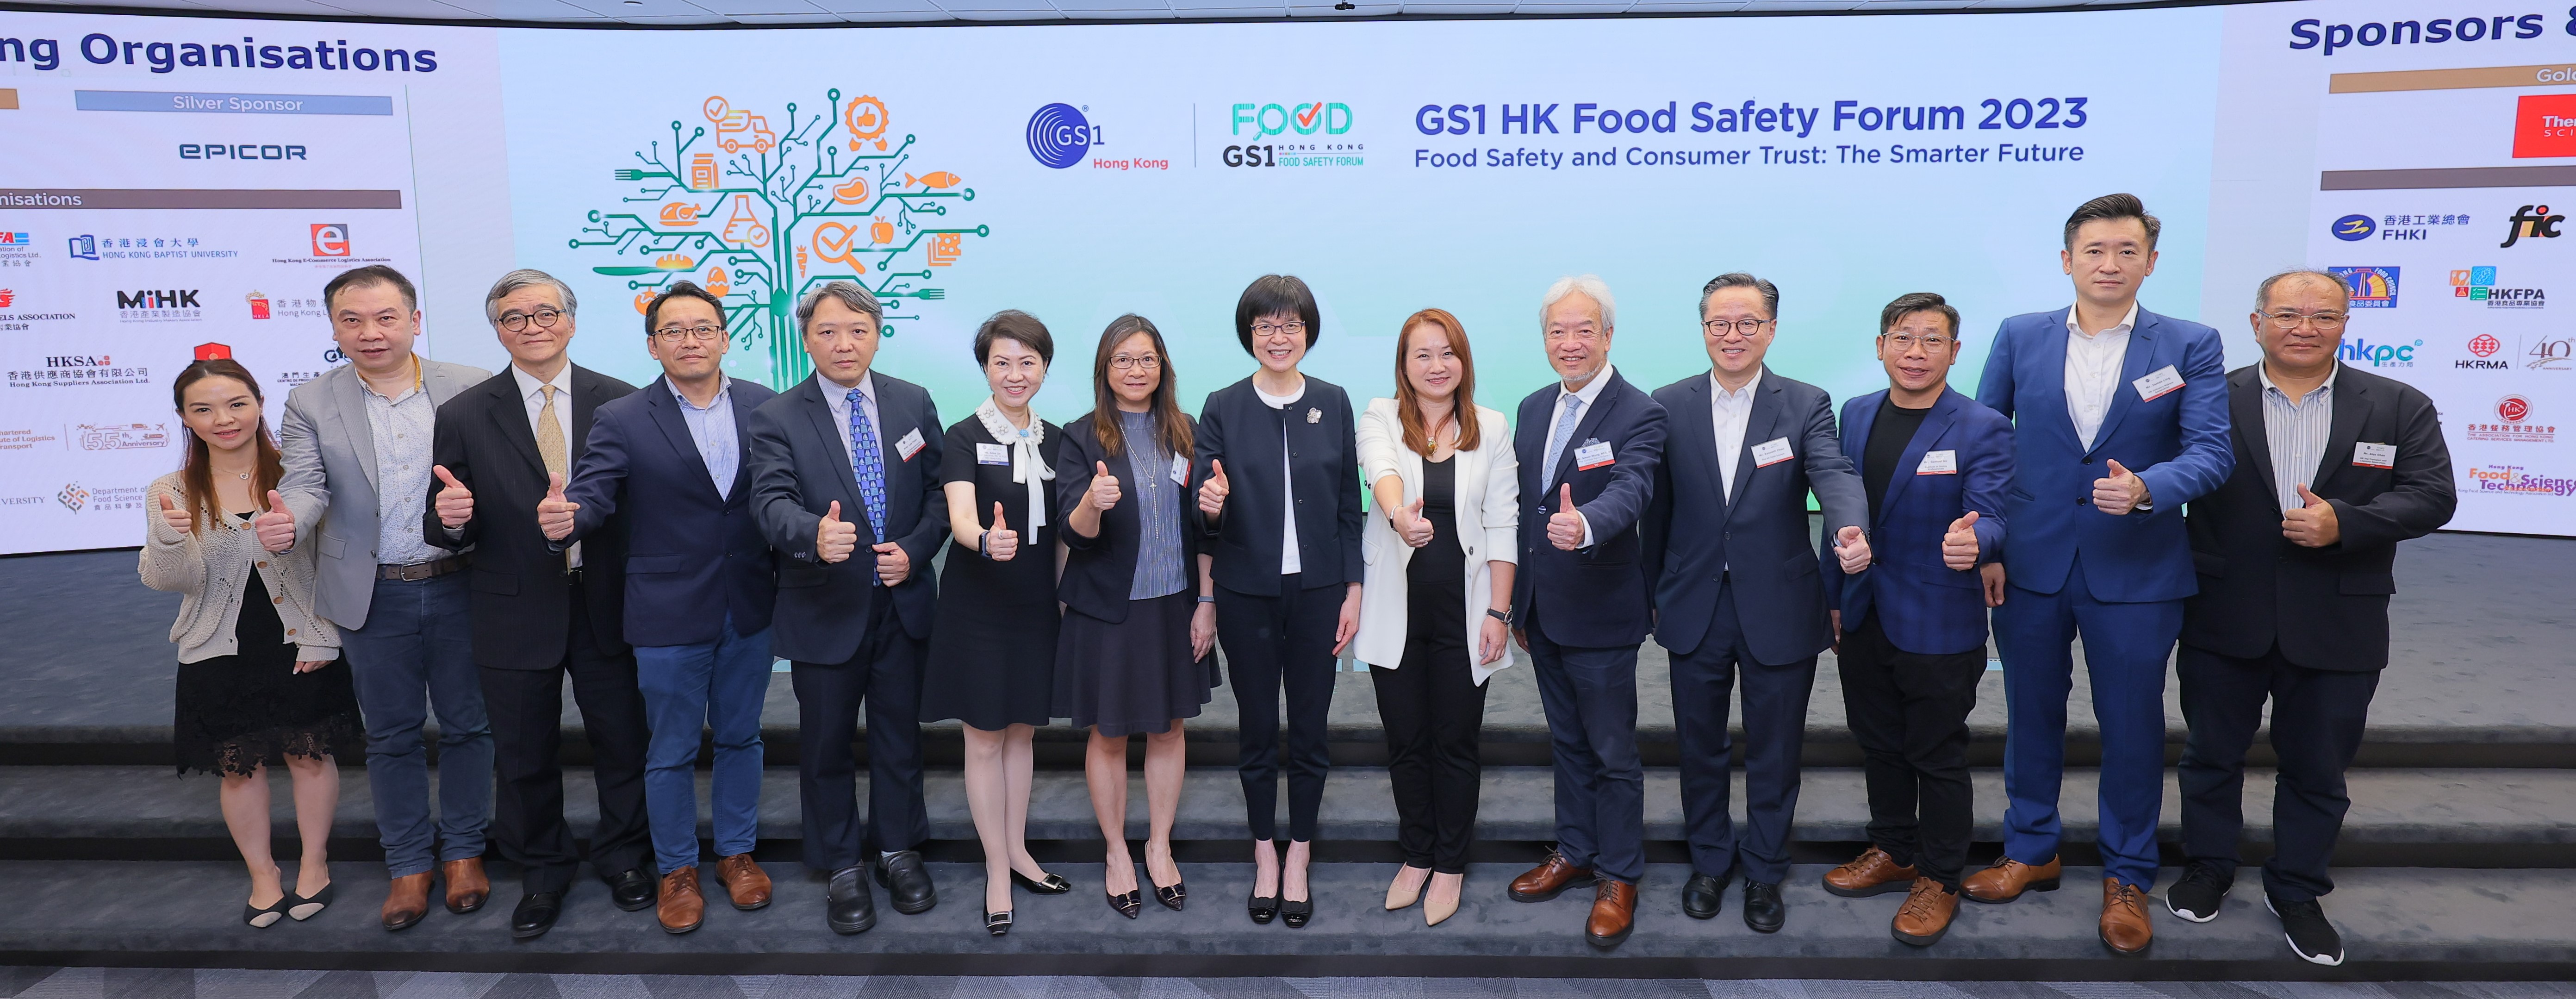 Food Safety Forum 2023